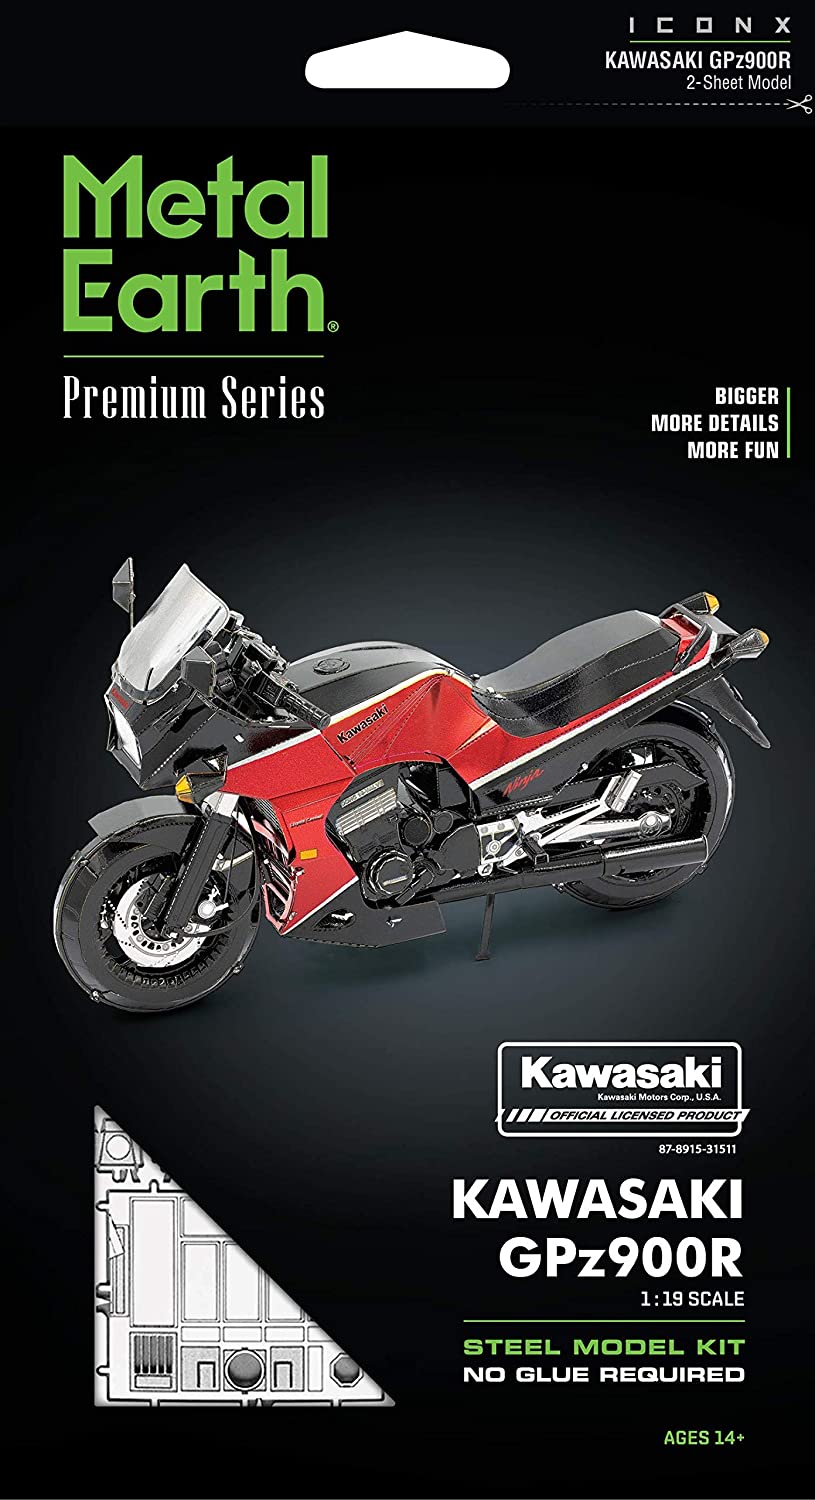 Metal Earth Premium Series ICONX: Kawasaki GPz900R